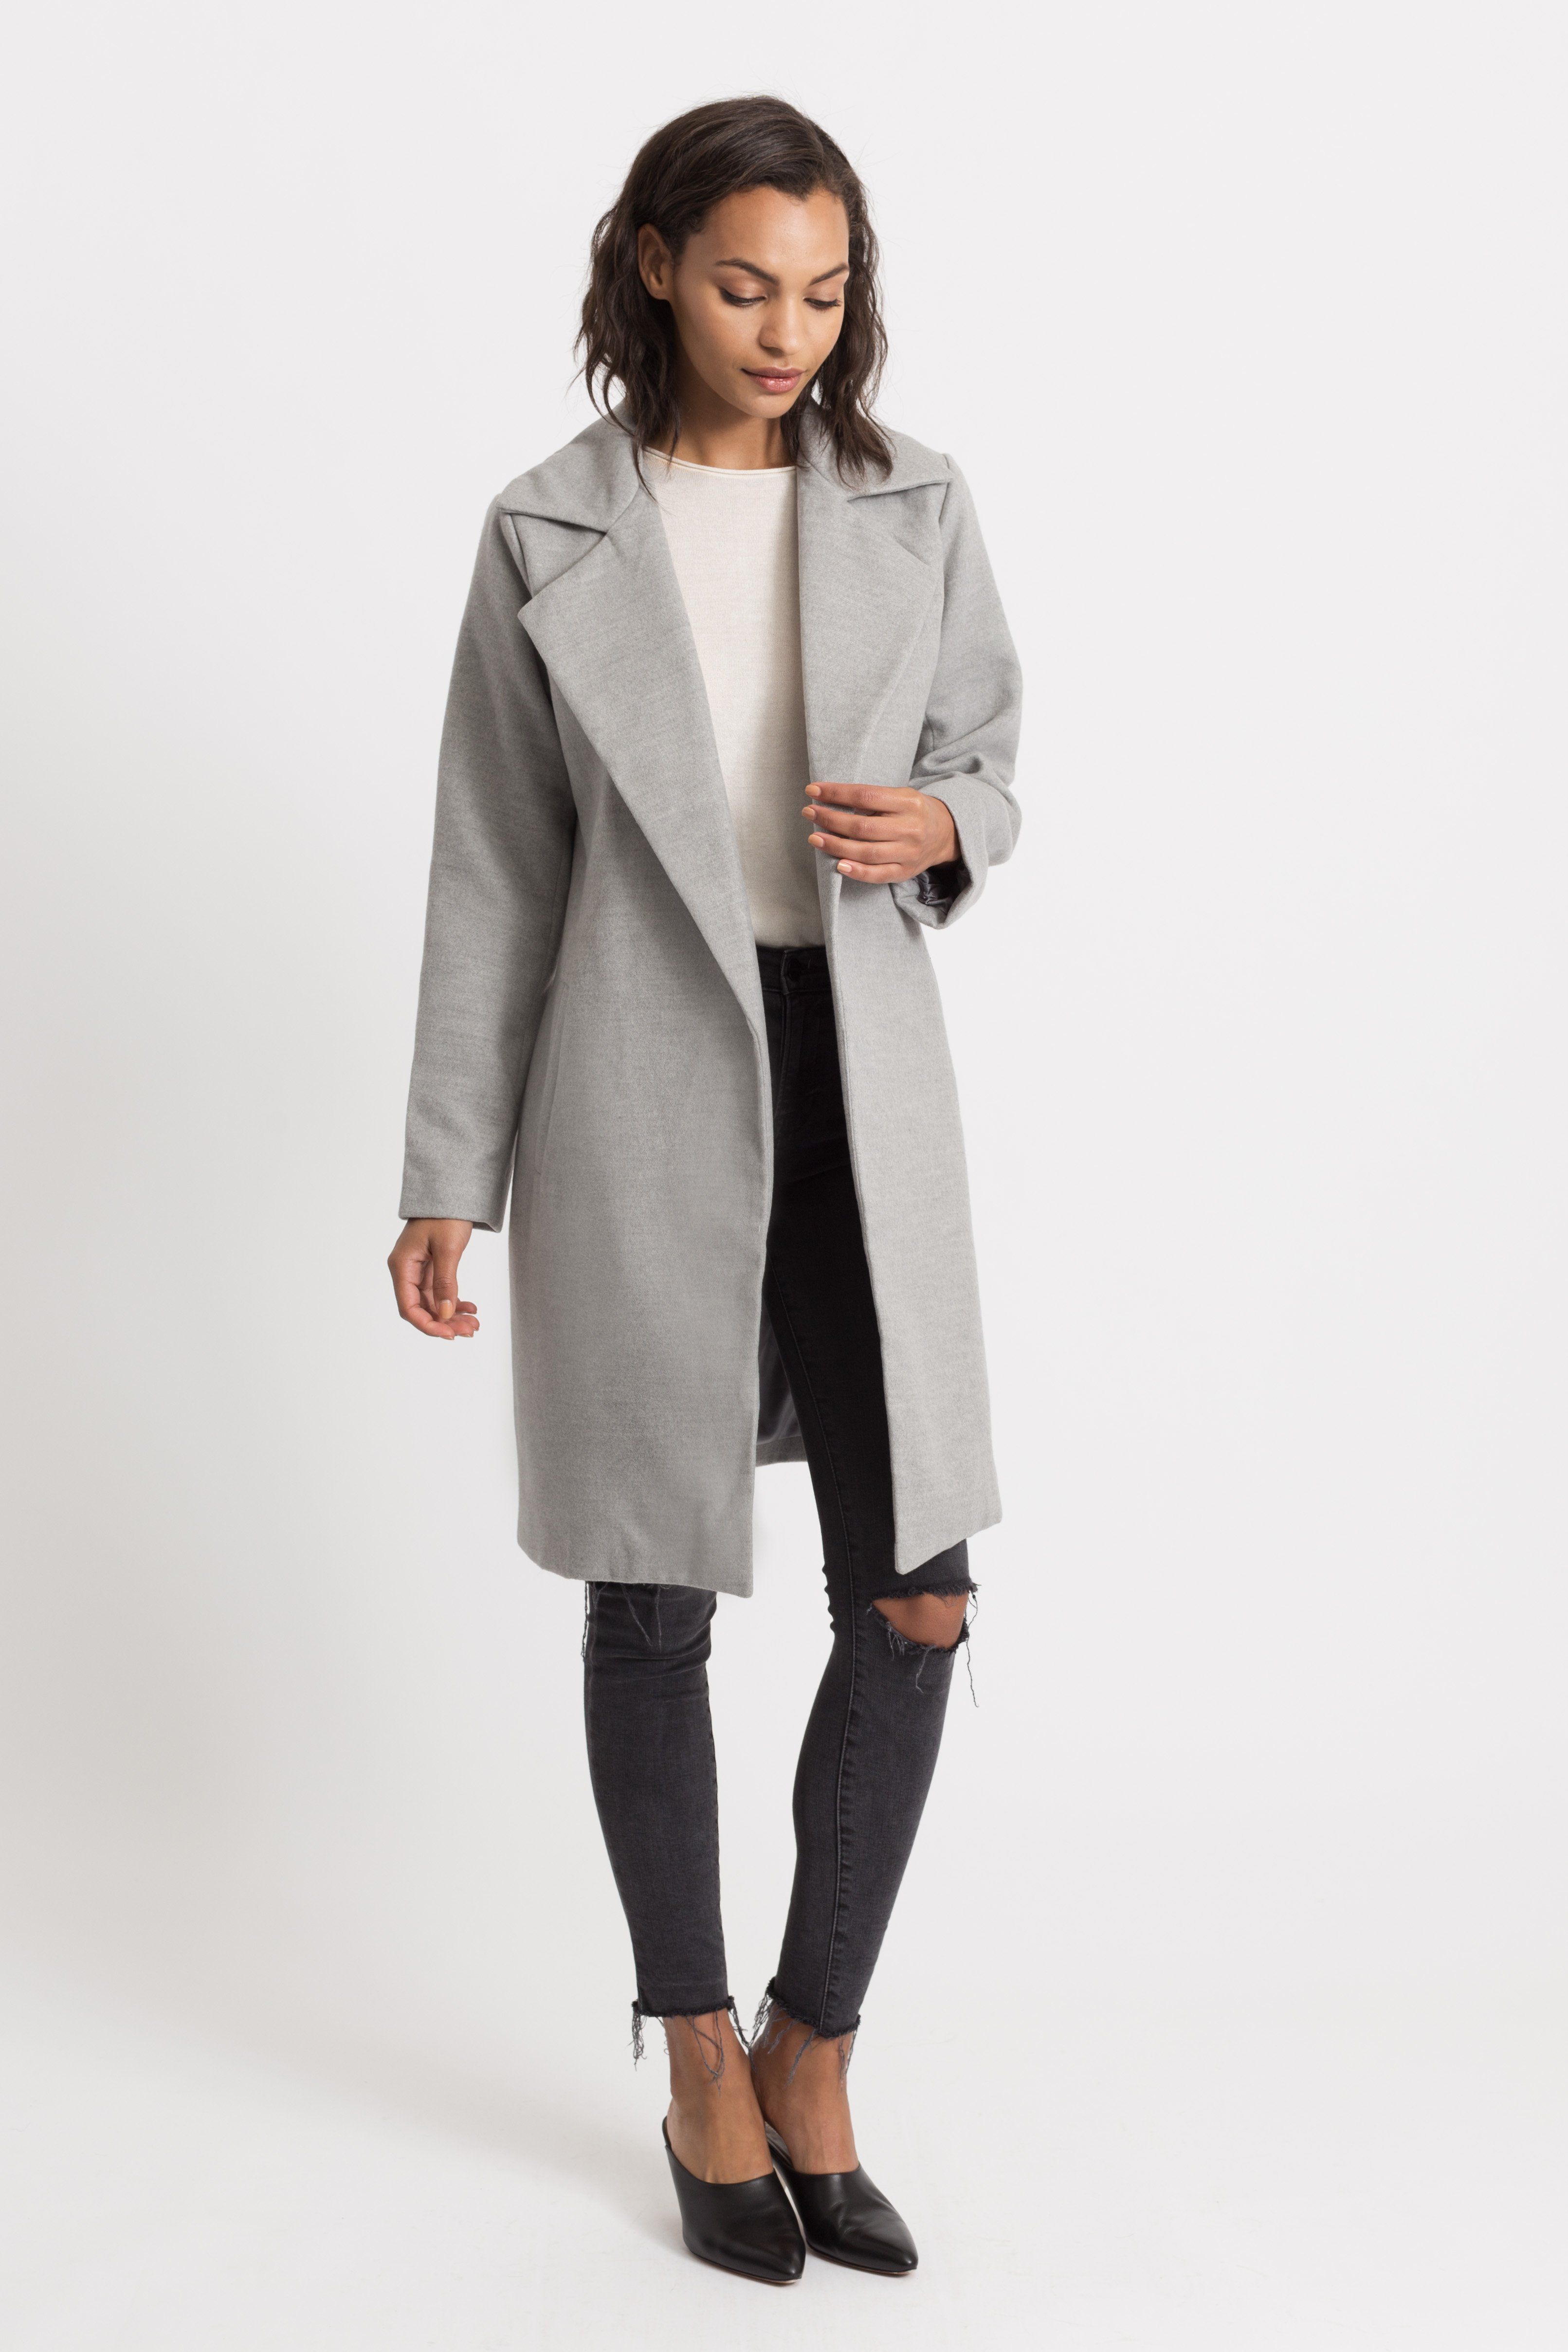 cute under $150 coats do exist!